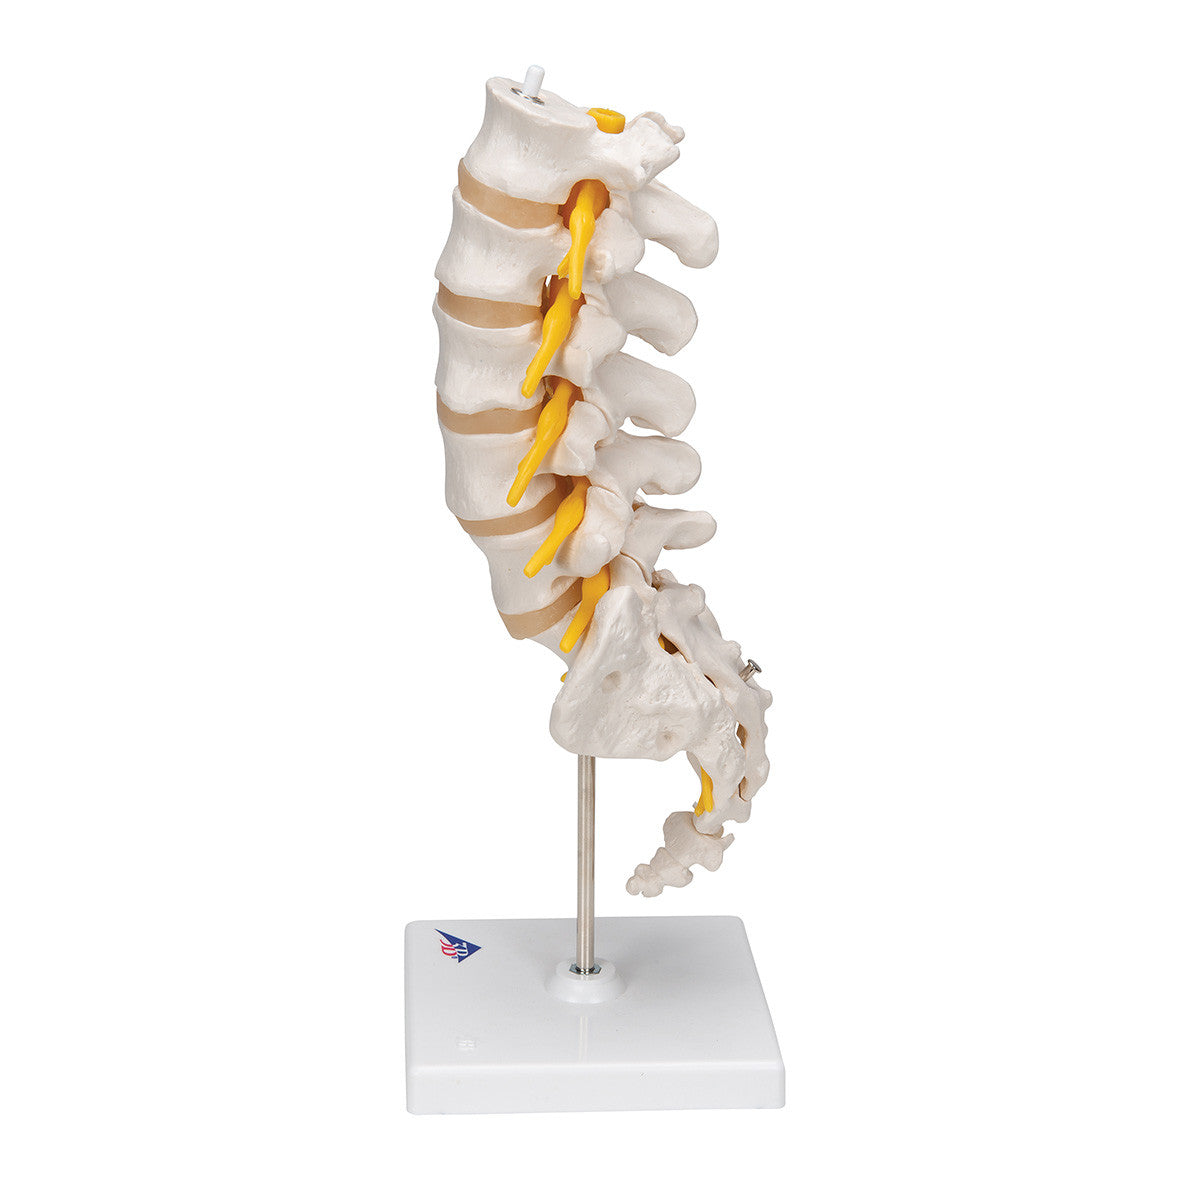 a74_03_1200_1200_lumbar-human-spinal-column-model-3b-smart-anatomy__93619.1589752910.1280.1280.jpg